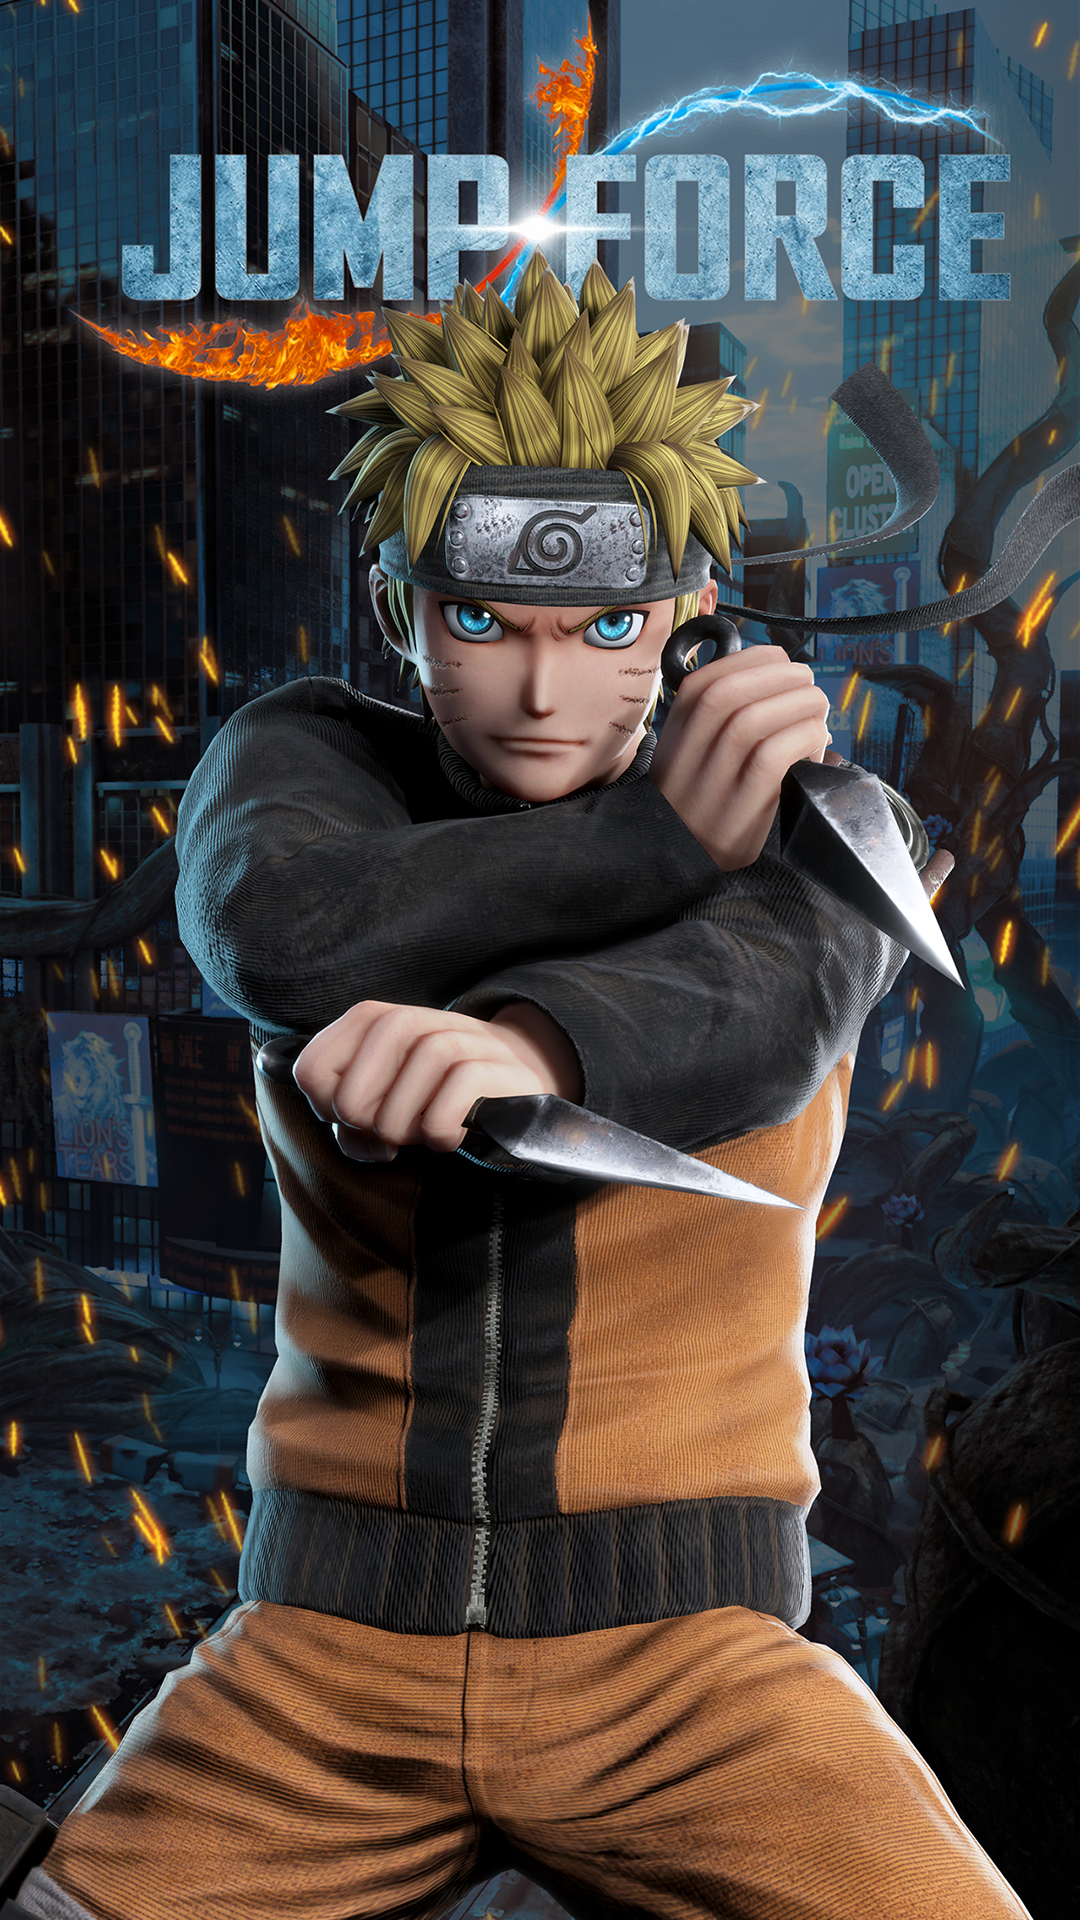 Naruto HD Wallpaper Top Best Ultra Background